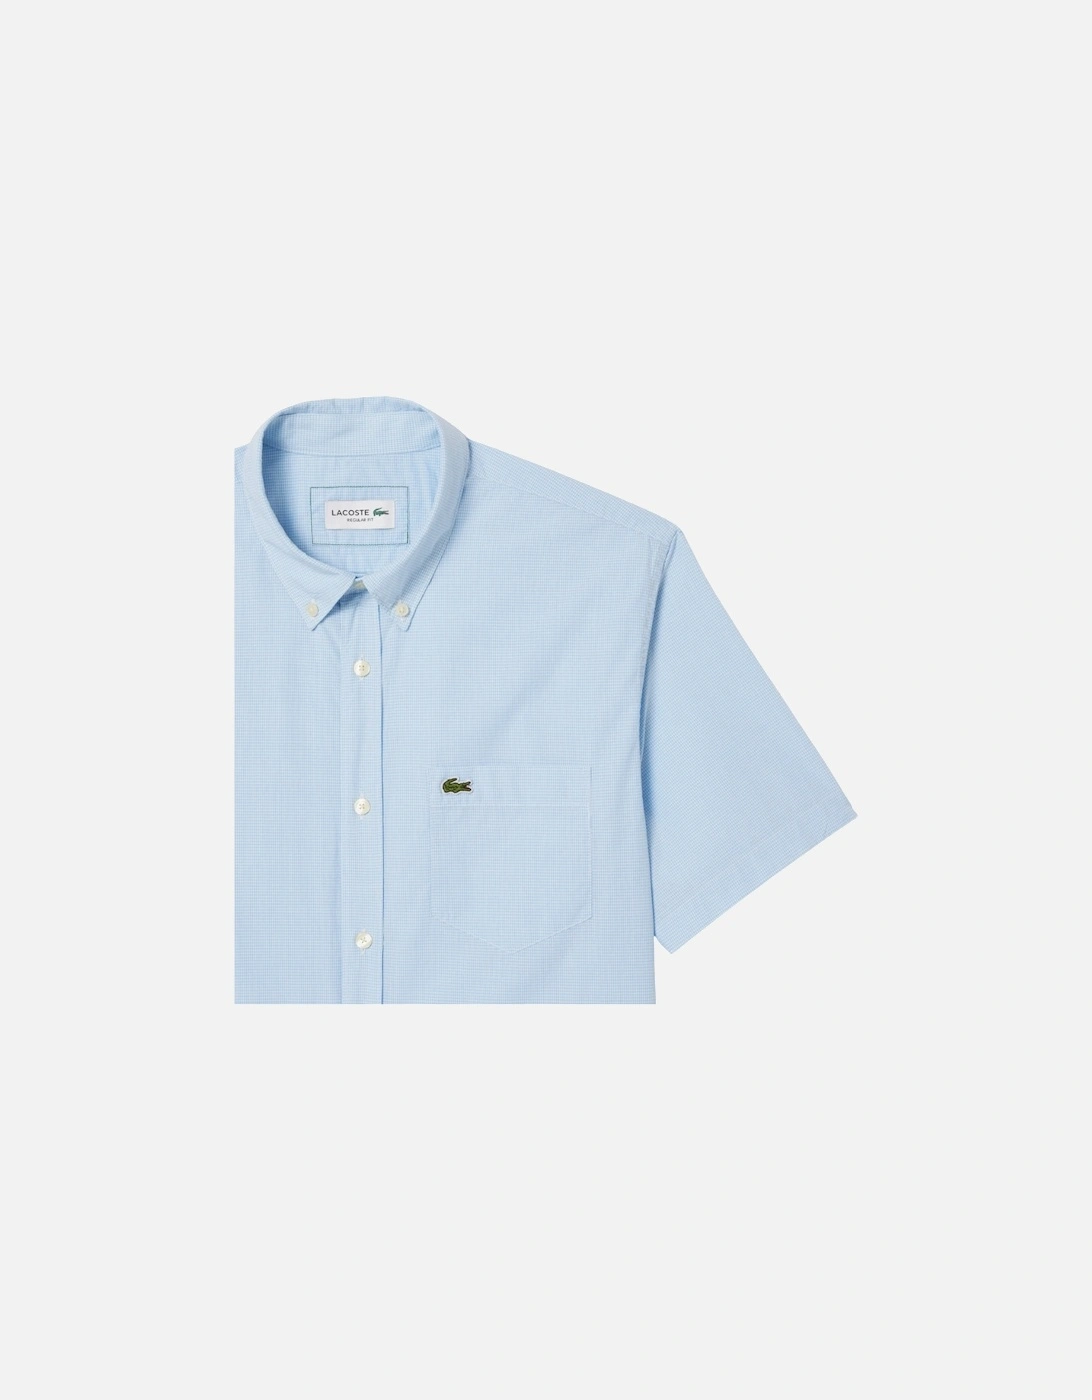 SS Gingham Shirt - White/Blue